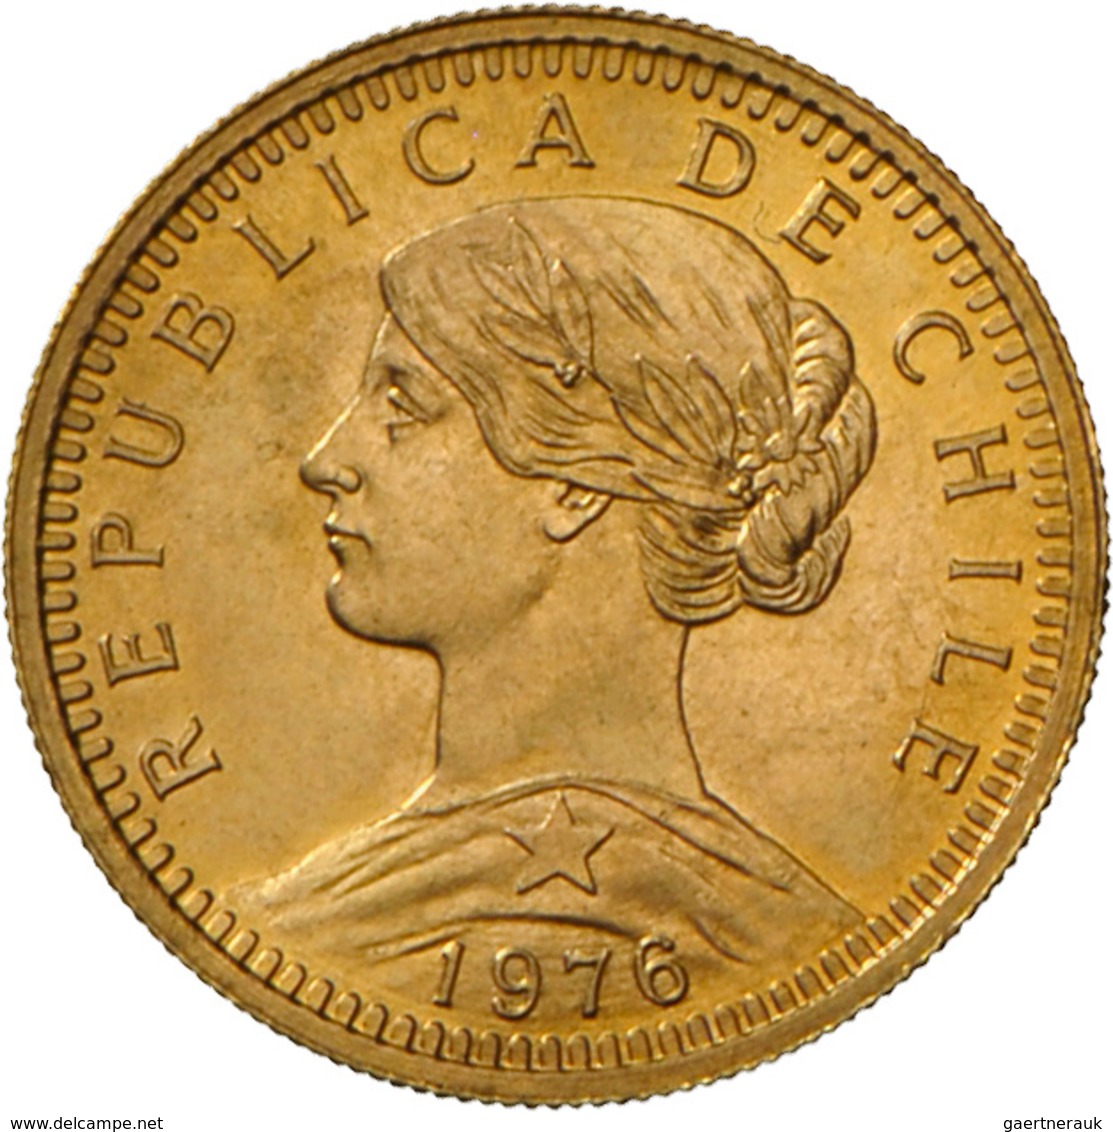 Chile - Anlagegold: Lot 4 Goldmünzen: 2 x 20 Pesos 1976, KM# 188, Friedberg 56. 4,06 g, 900/1000 Gol